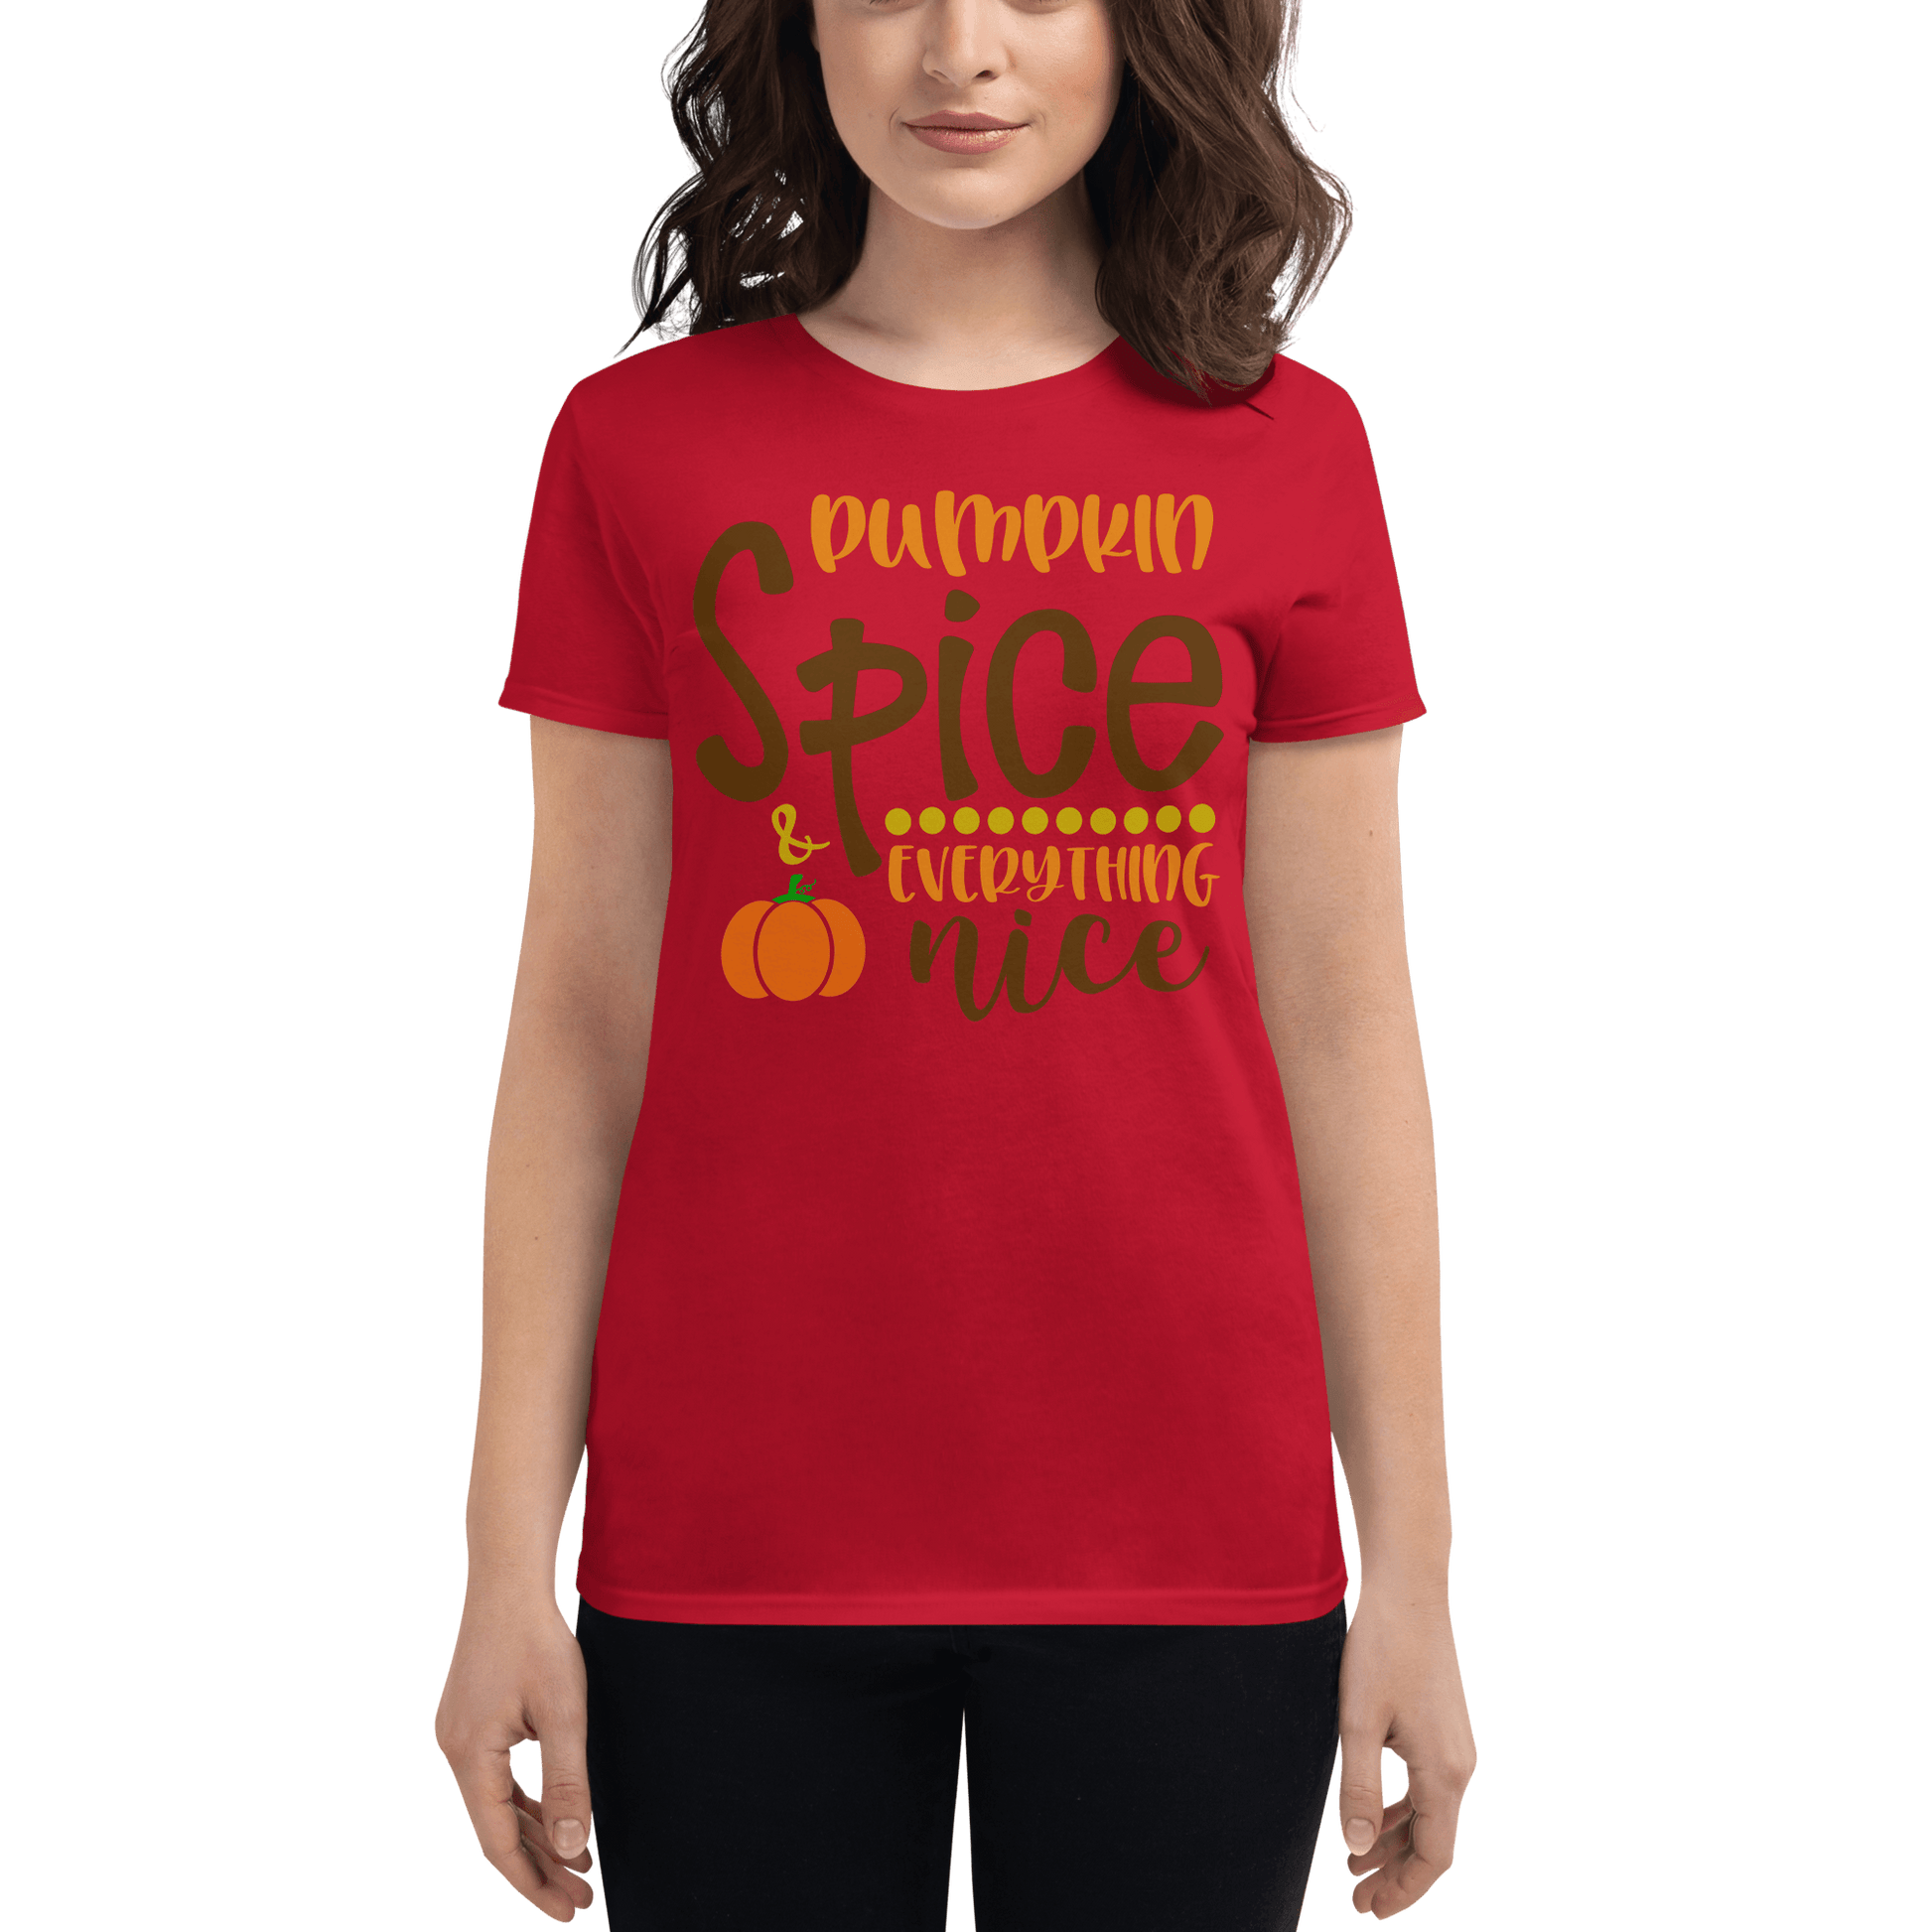 Pumpkin Spice Everything Nice T-Shirt - L & M Kee, LLC